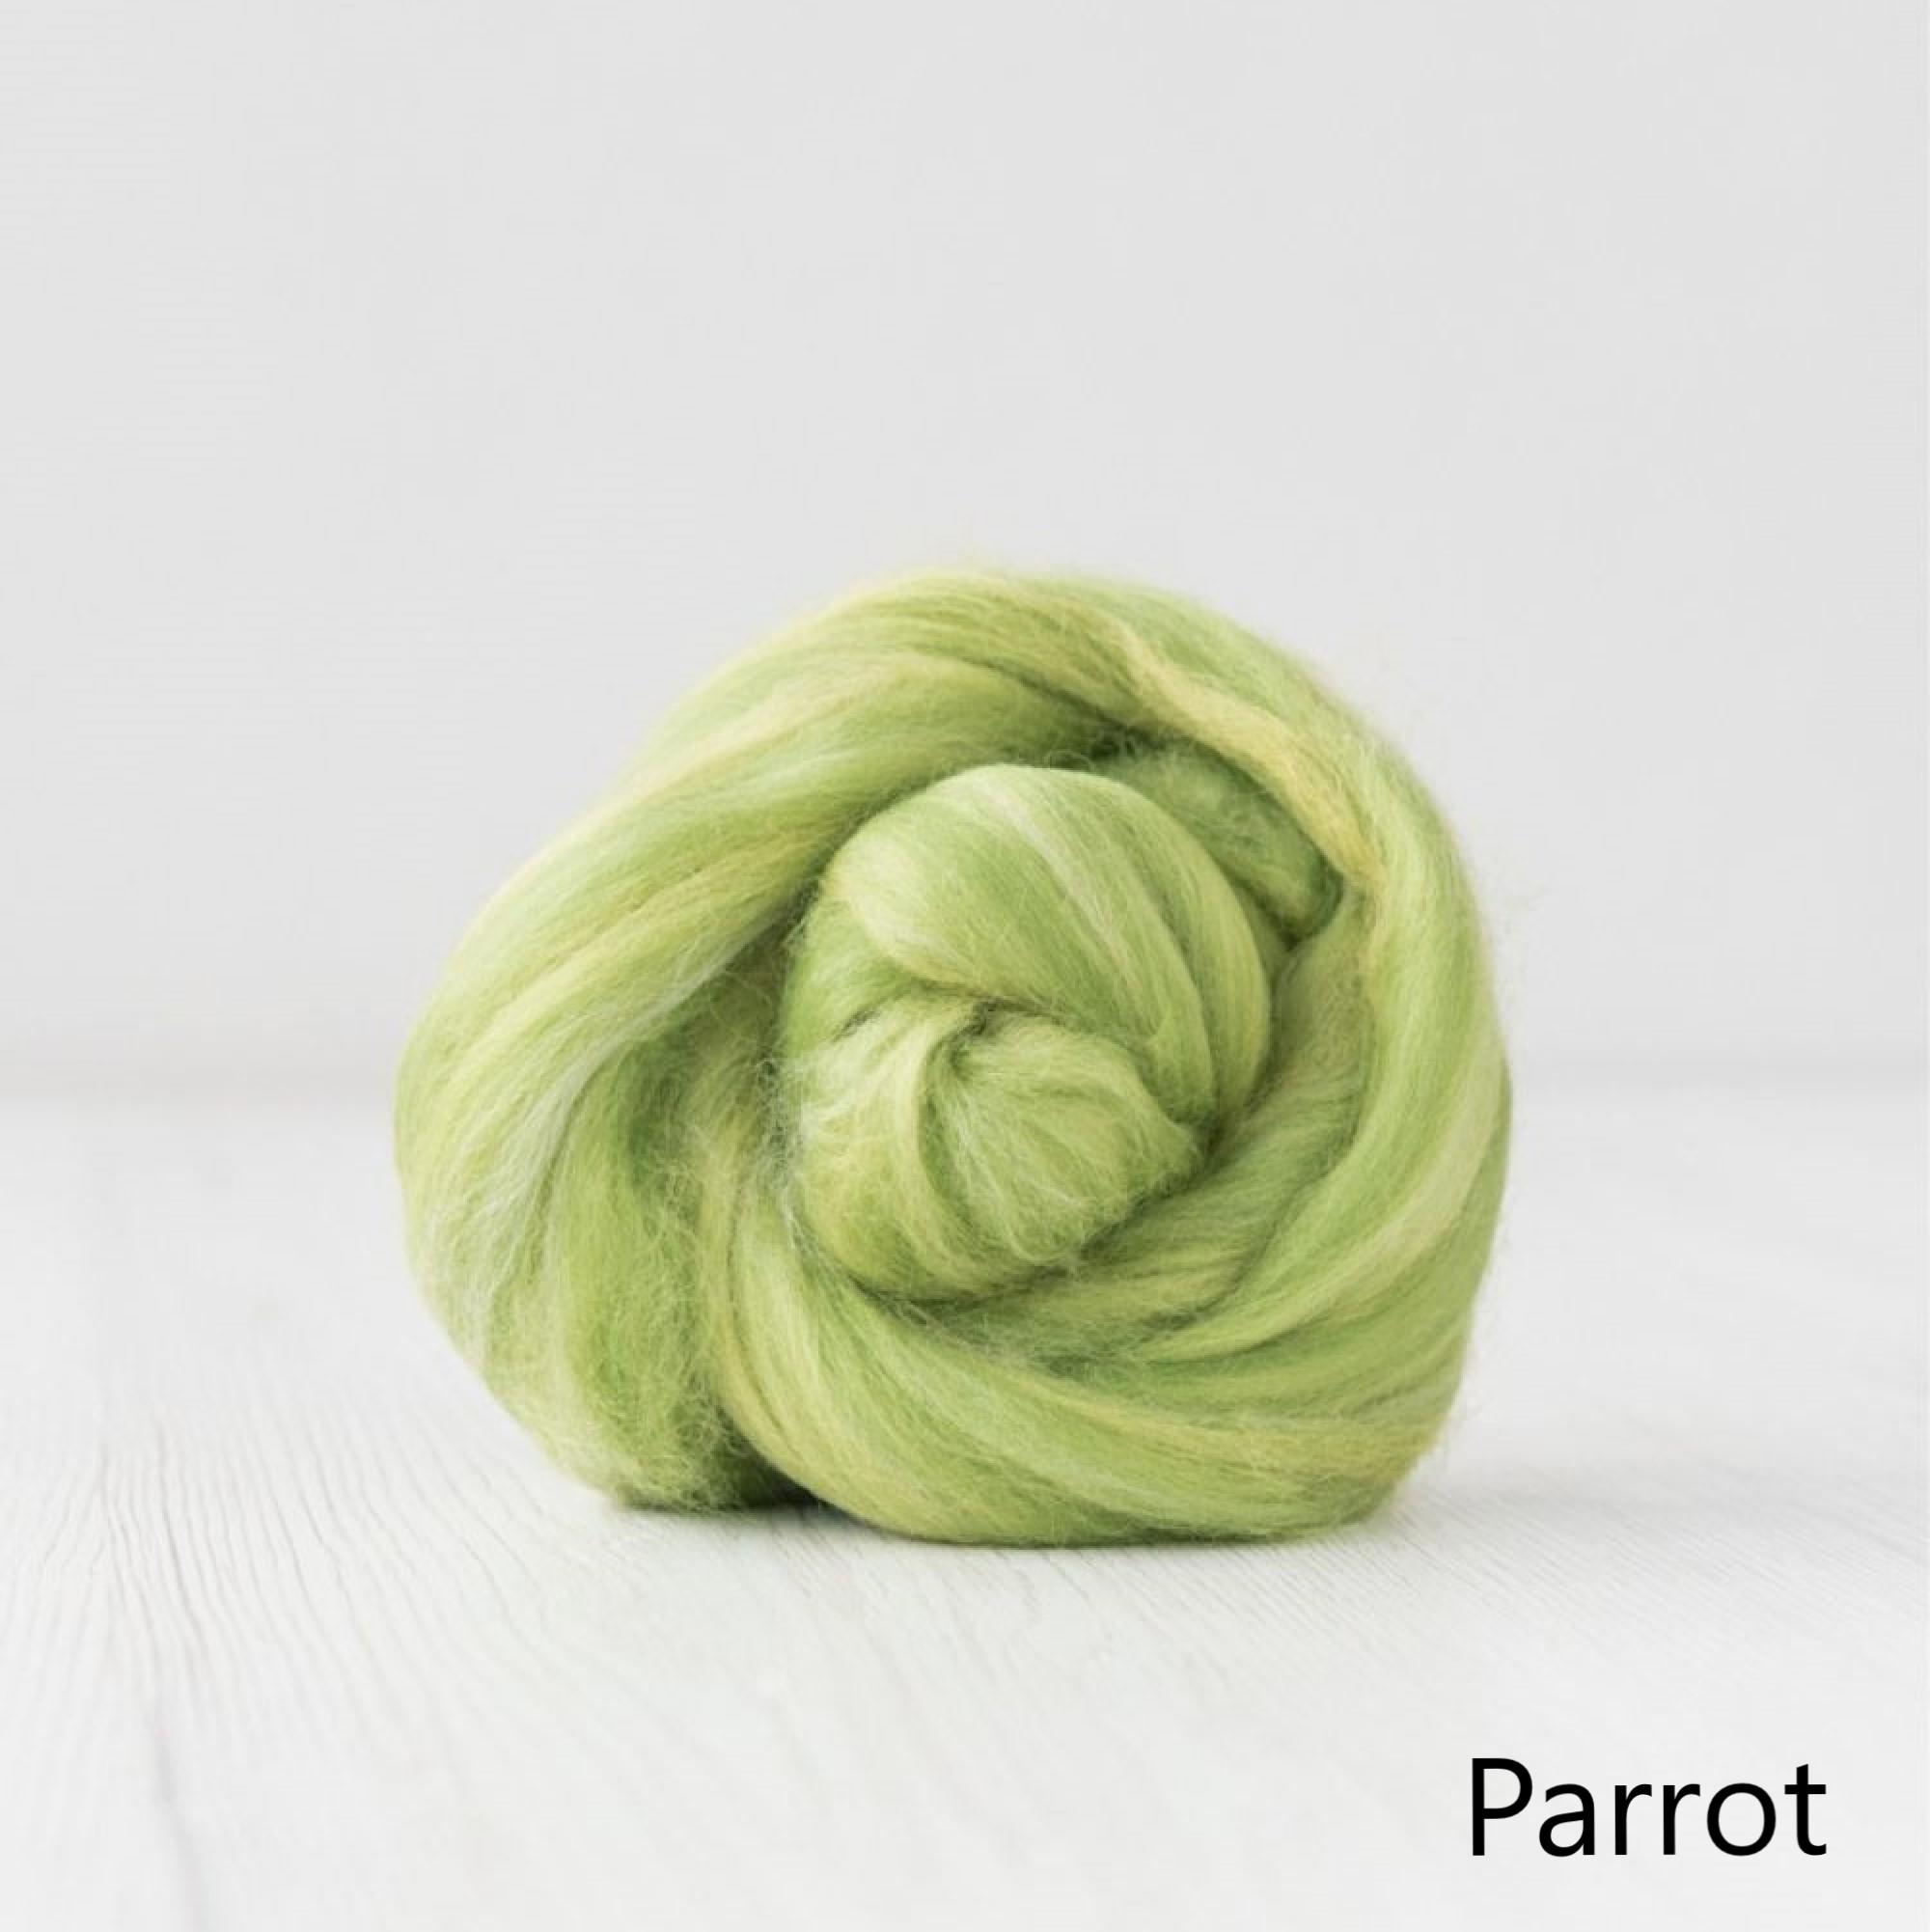 Parrot Merino and Silk Roving